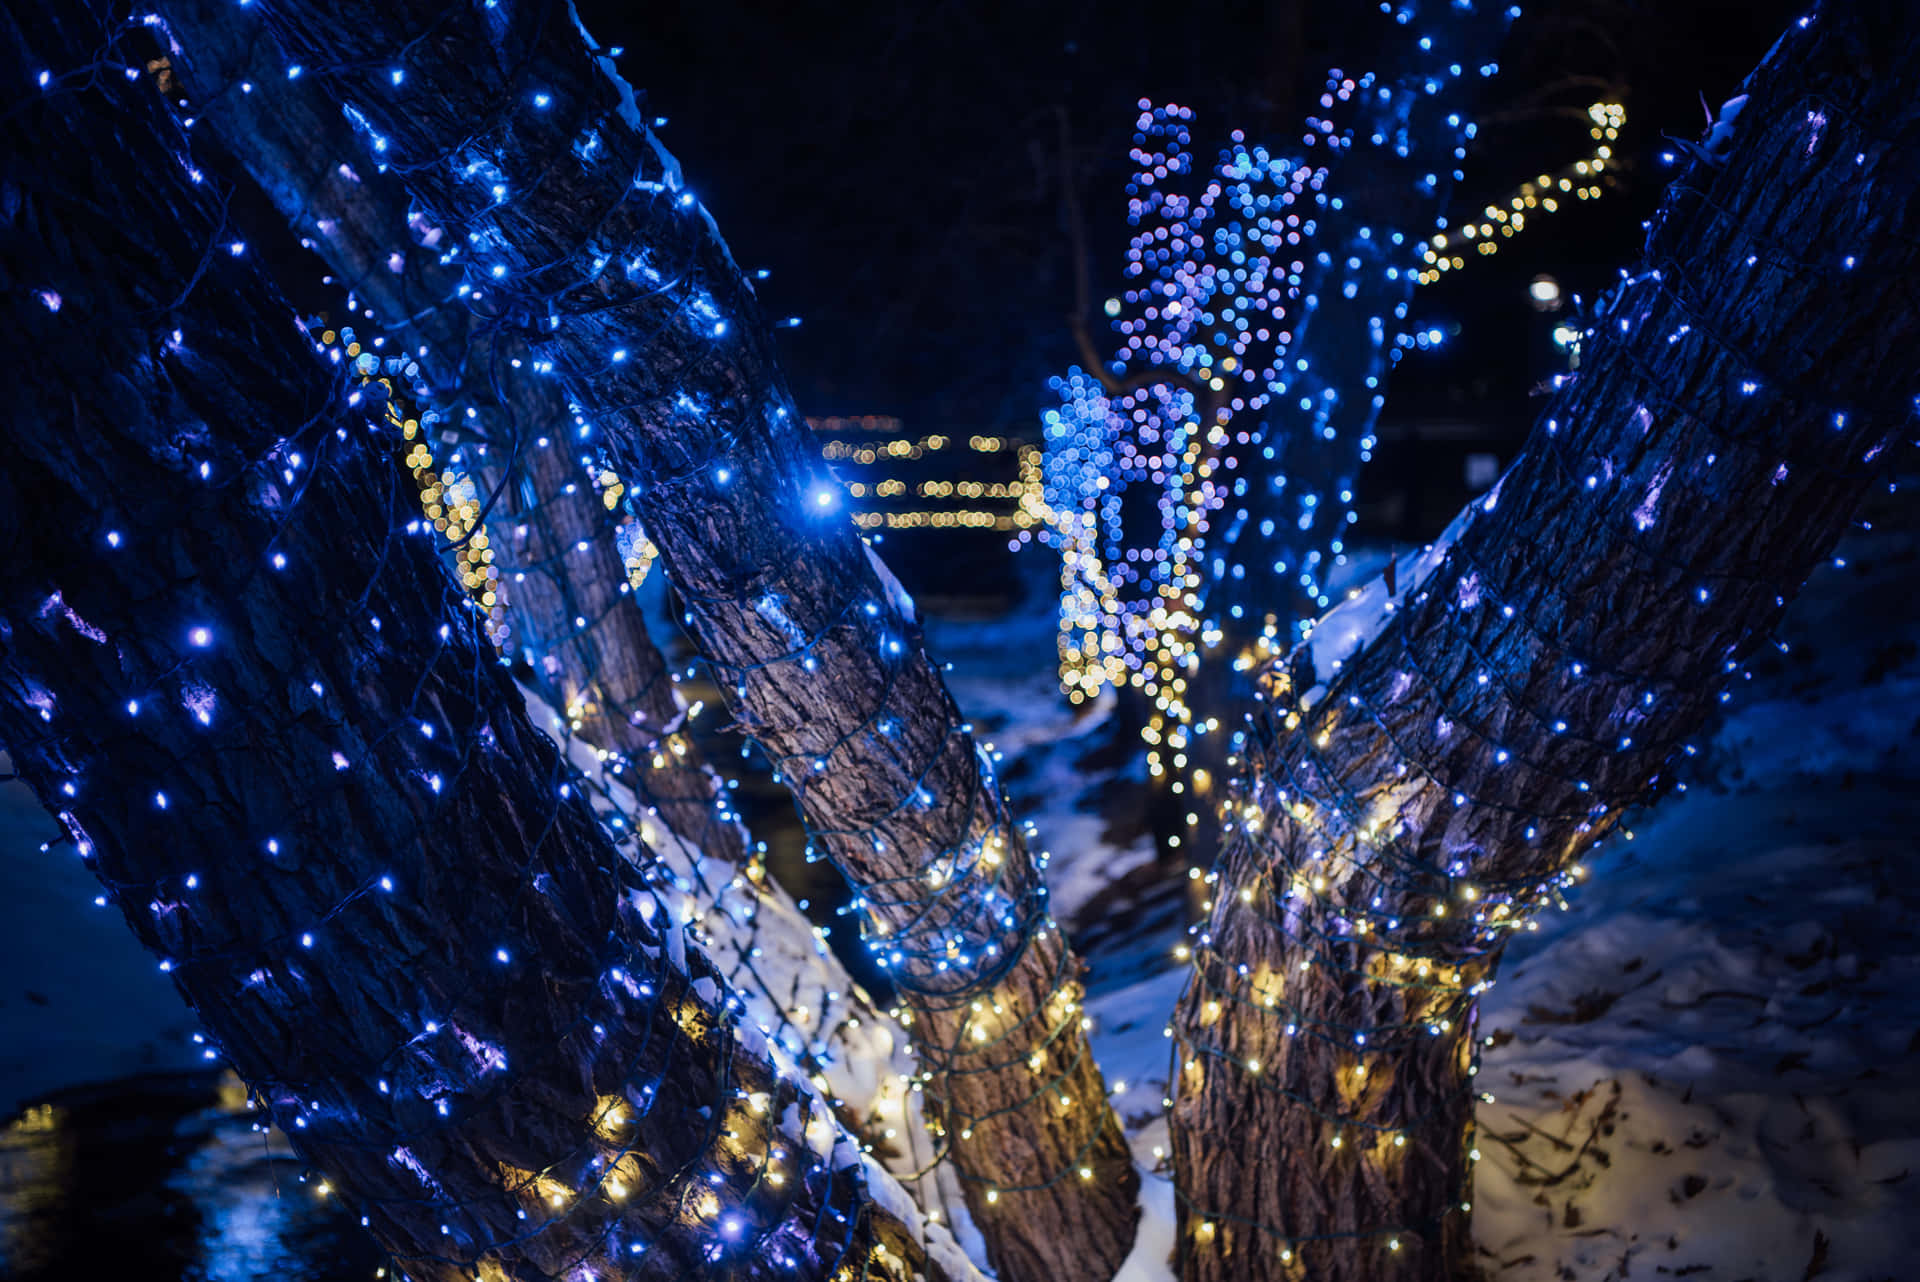 Share the festive spirit with Christmas lights!